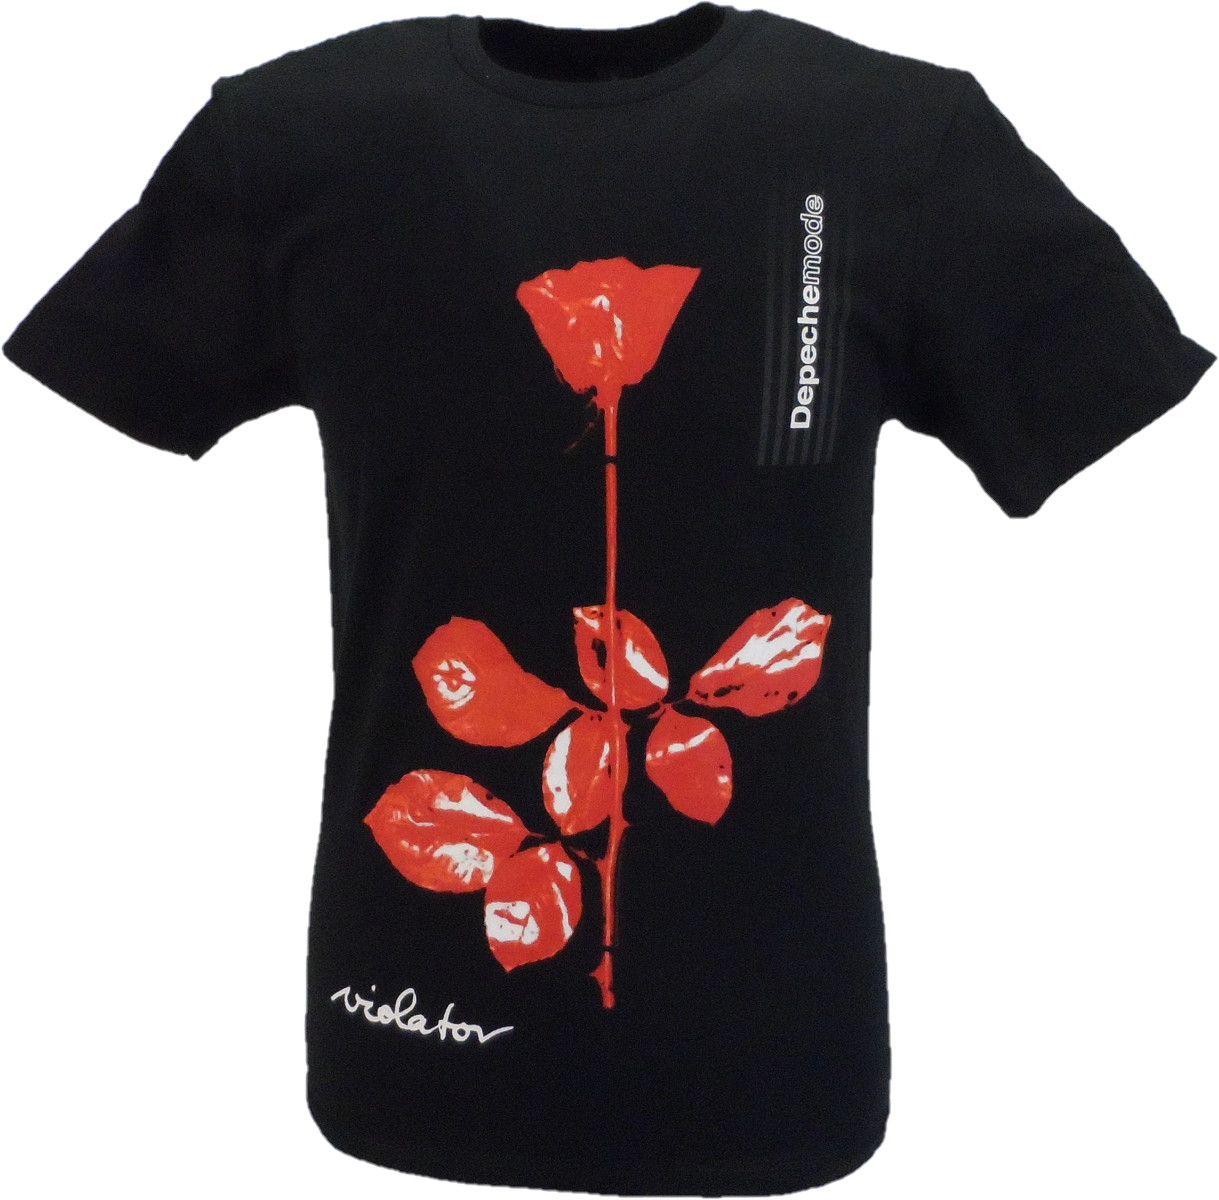 Mens Black Official Depeche Mode Violator T Shirt